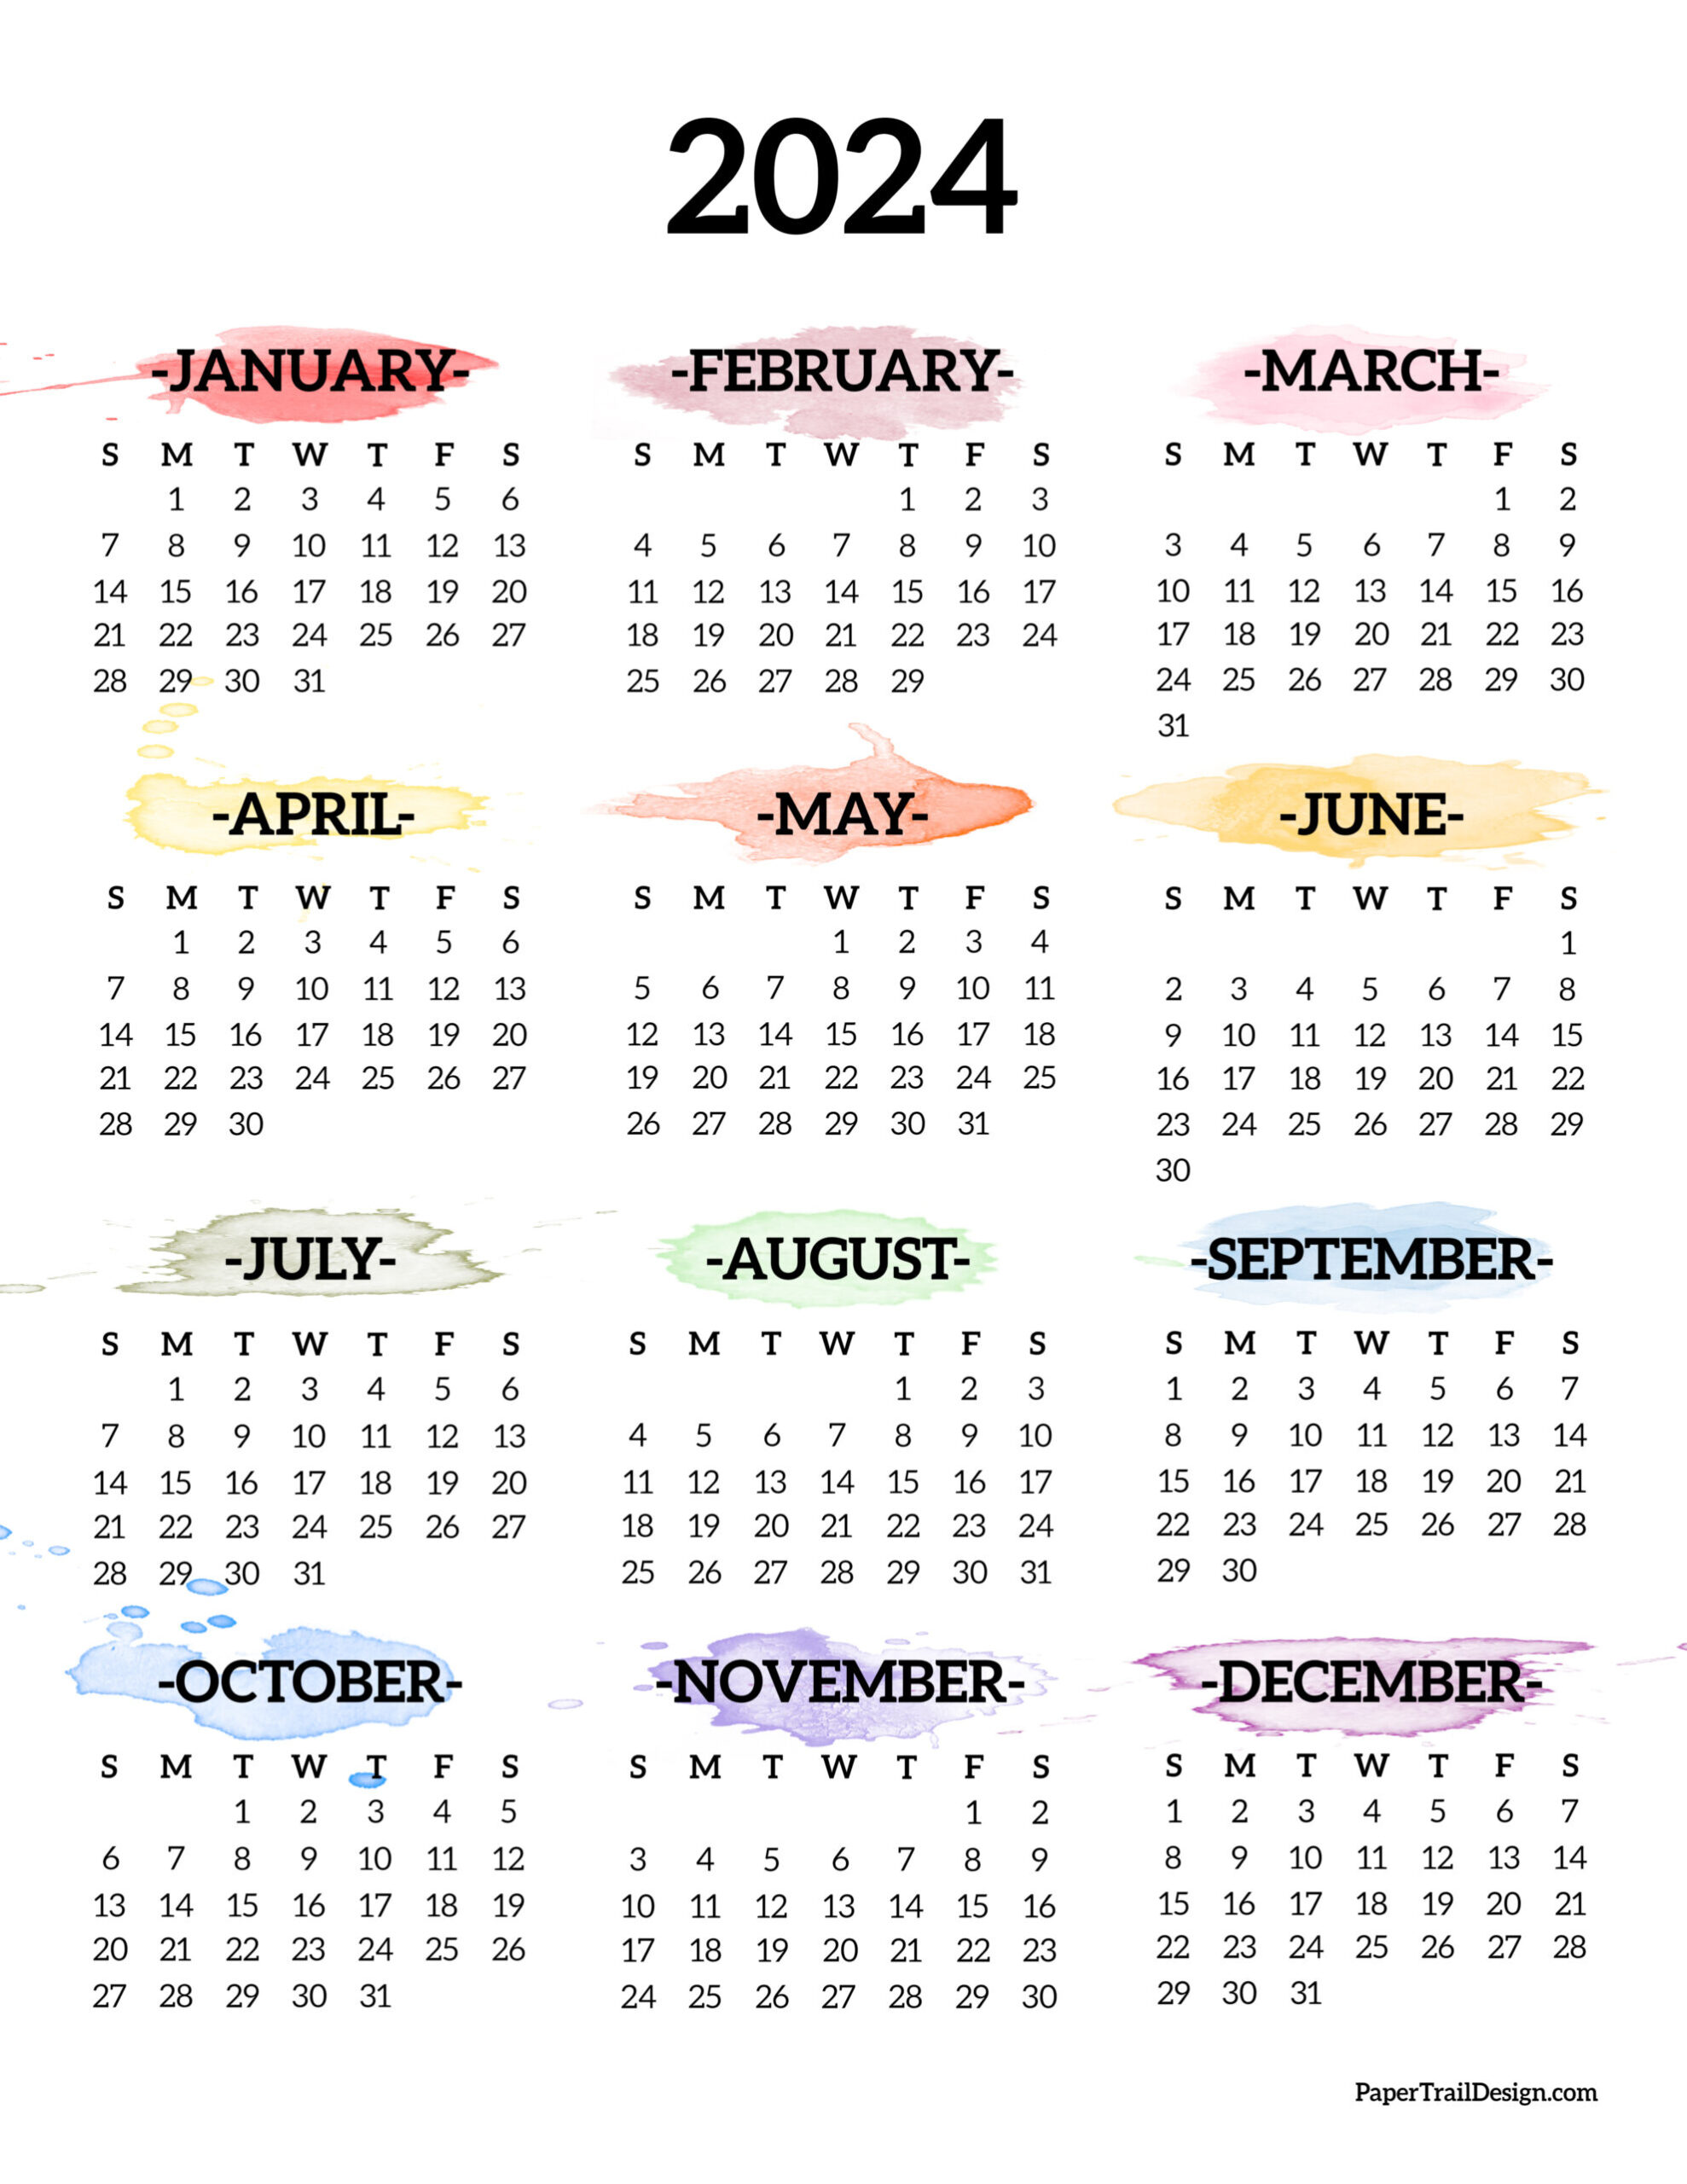 Calendar 2024 Printable One Page - Paper Trail Design | 2024 Calendars